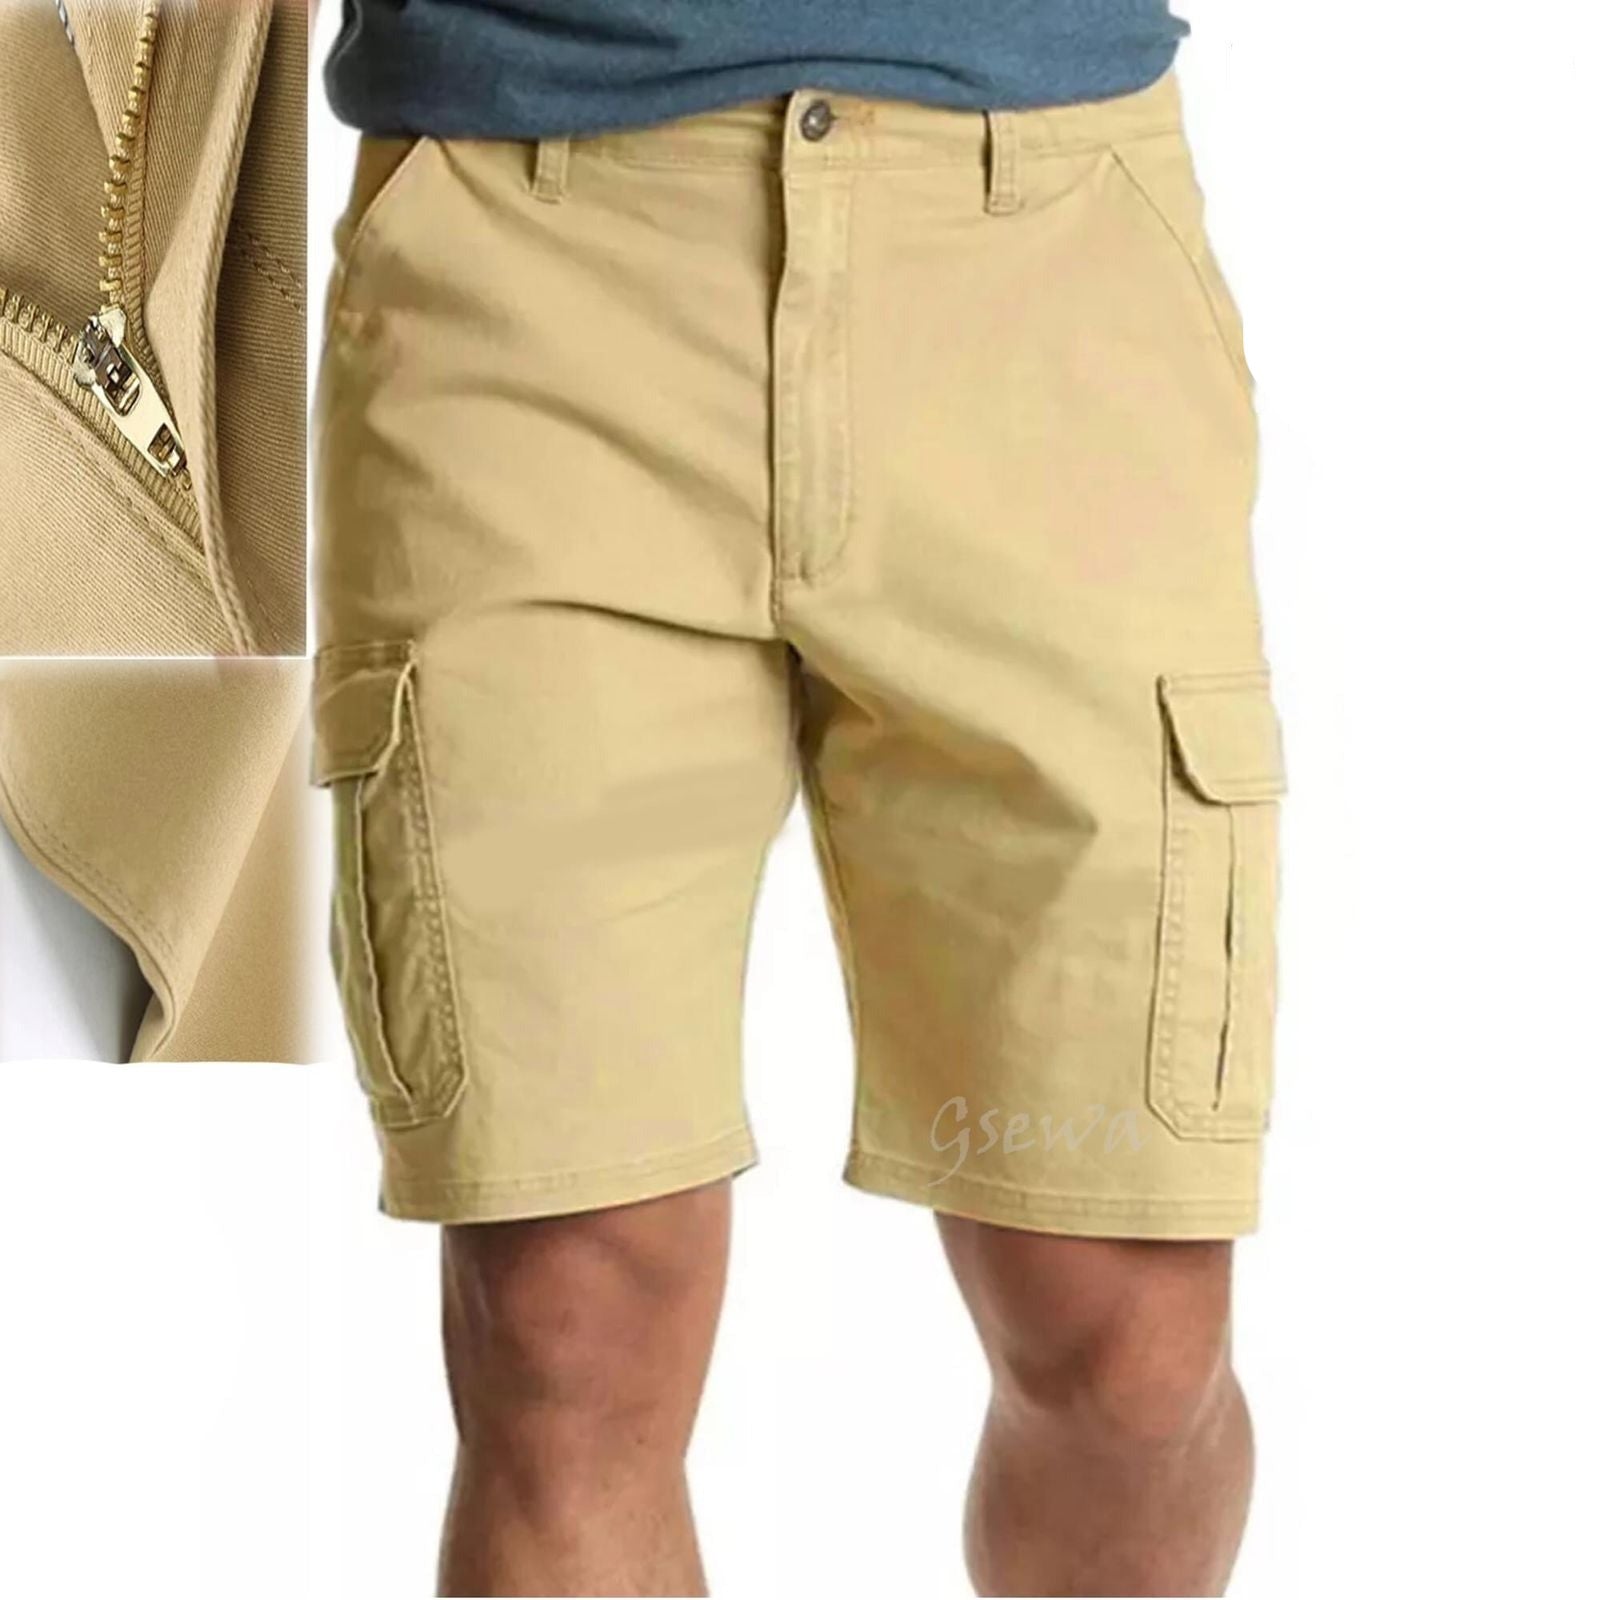 Boys half pant shorts Combo Pack of 5